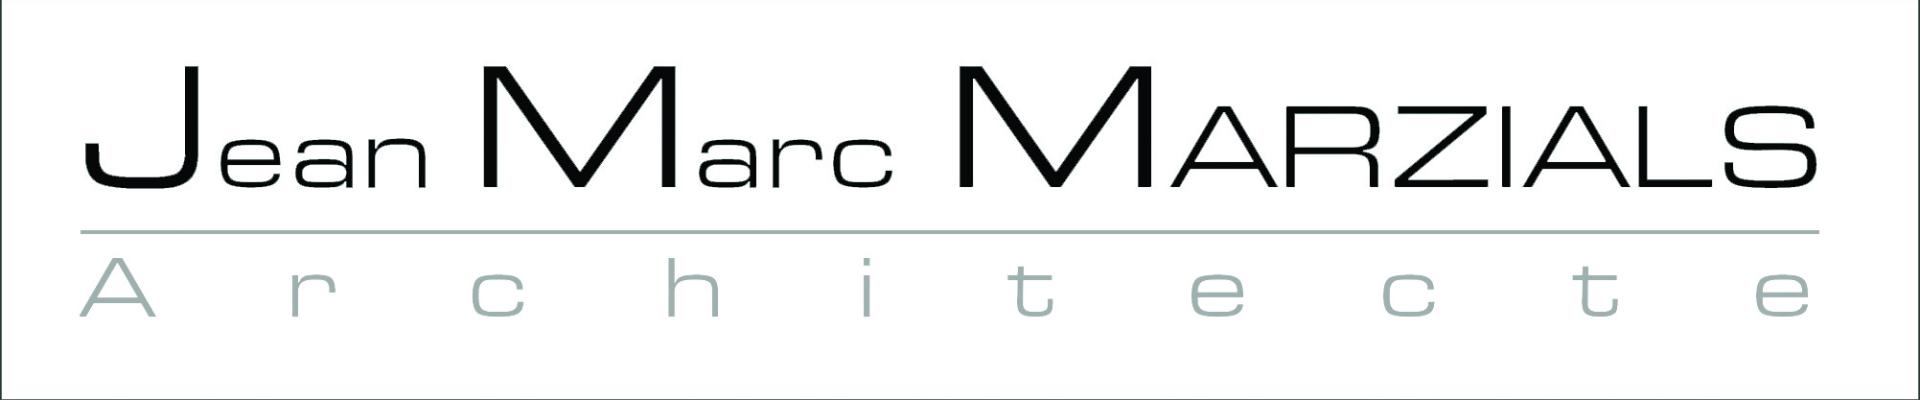 logo_jean_marc_marzials_blanc.jpg